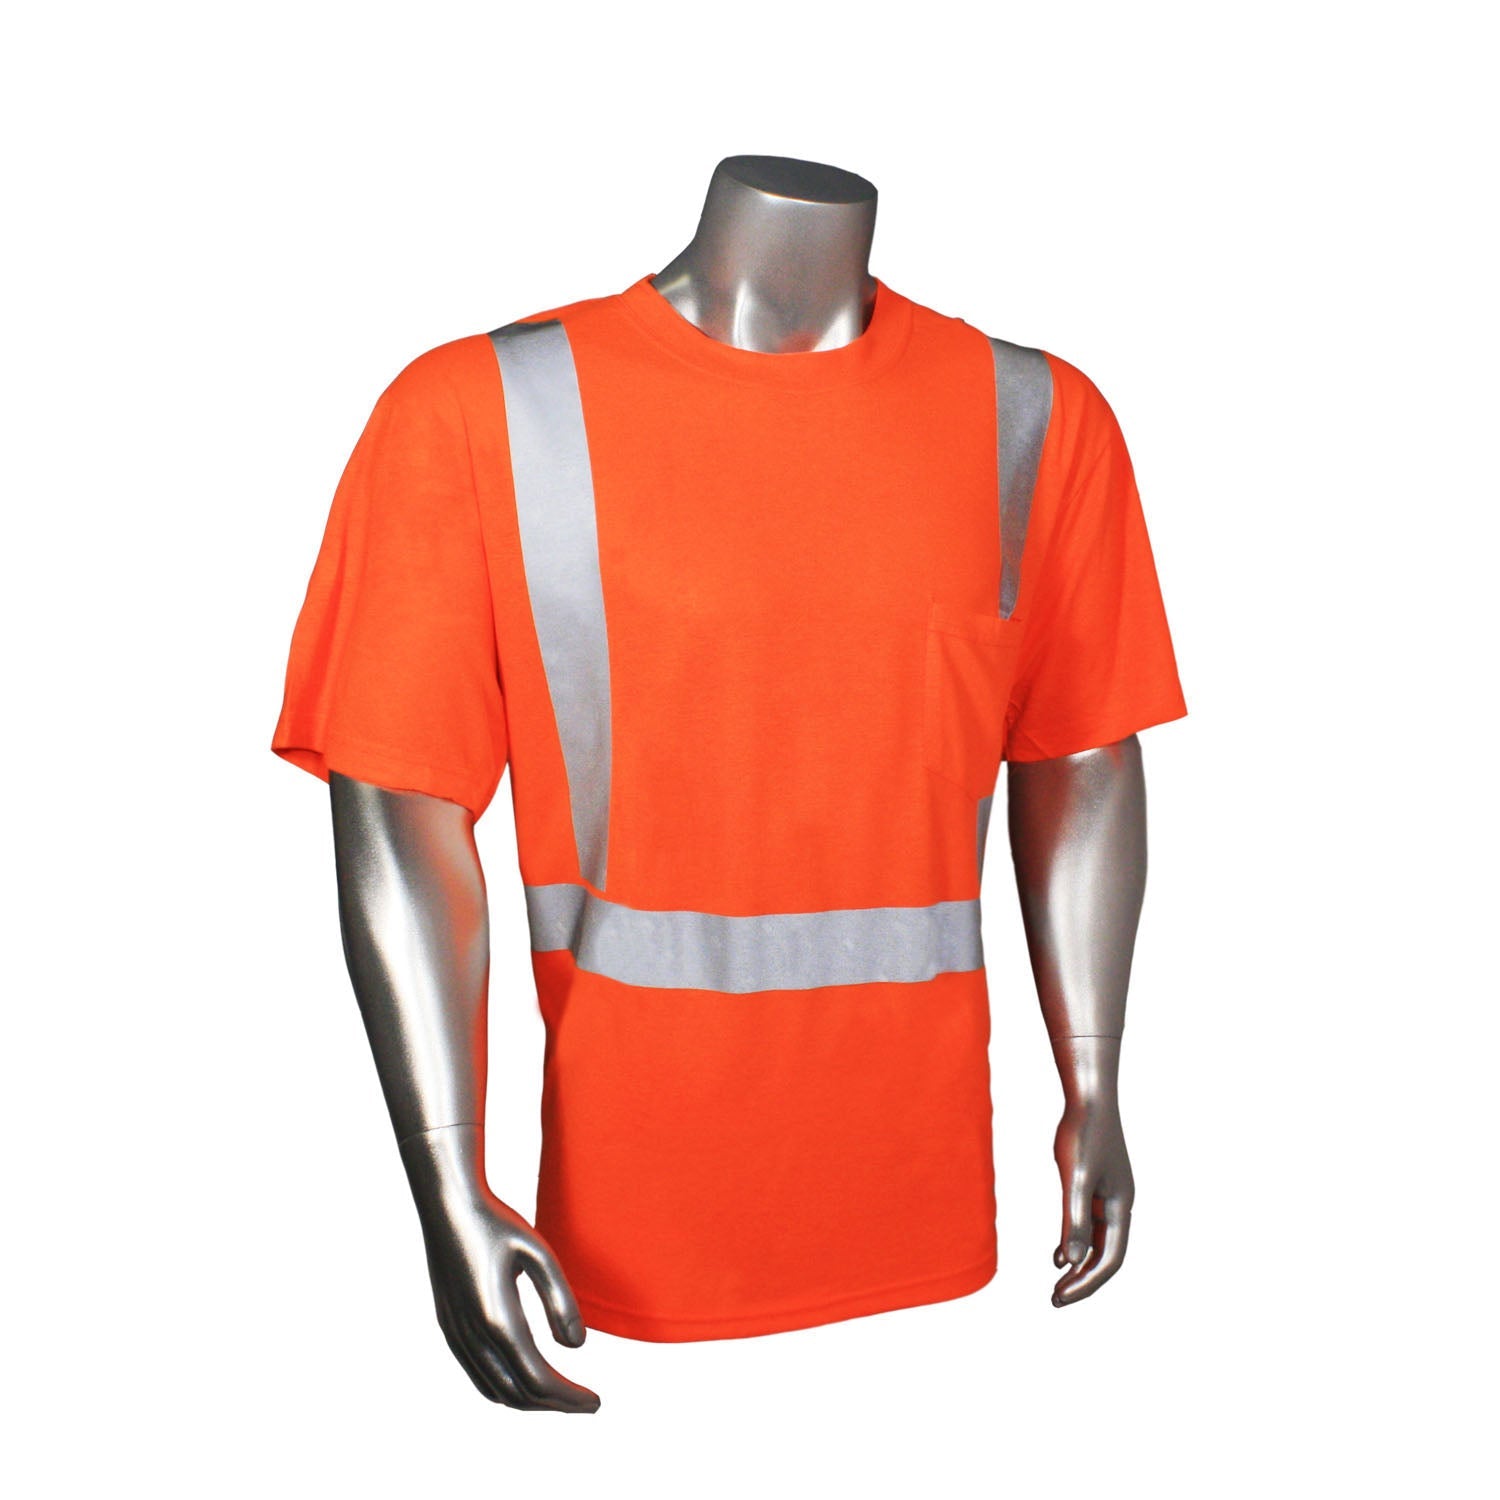 Radwear USA Hydrowick Short Sleeve Solid Safety T-Shirt